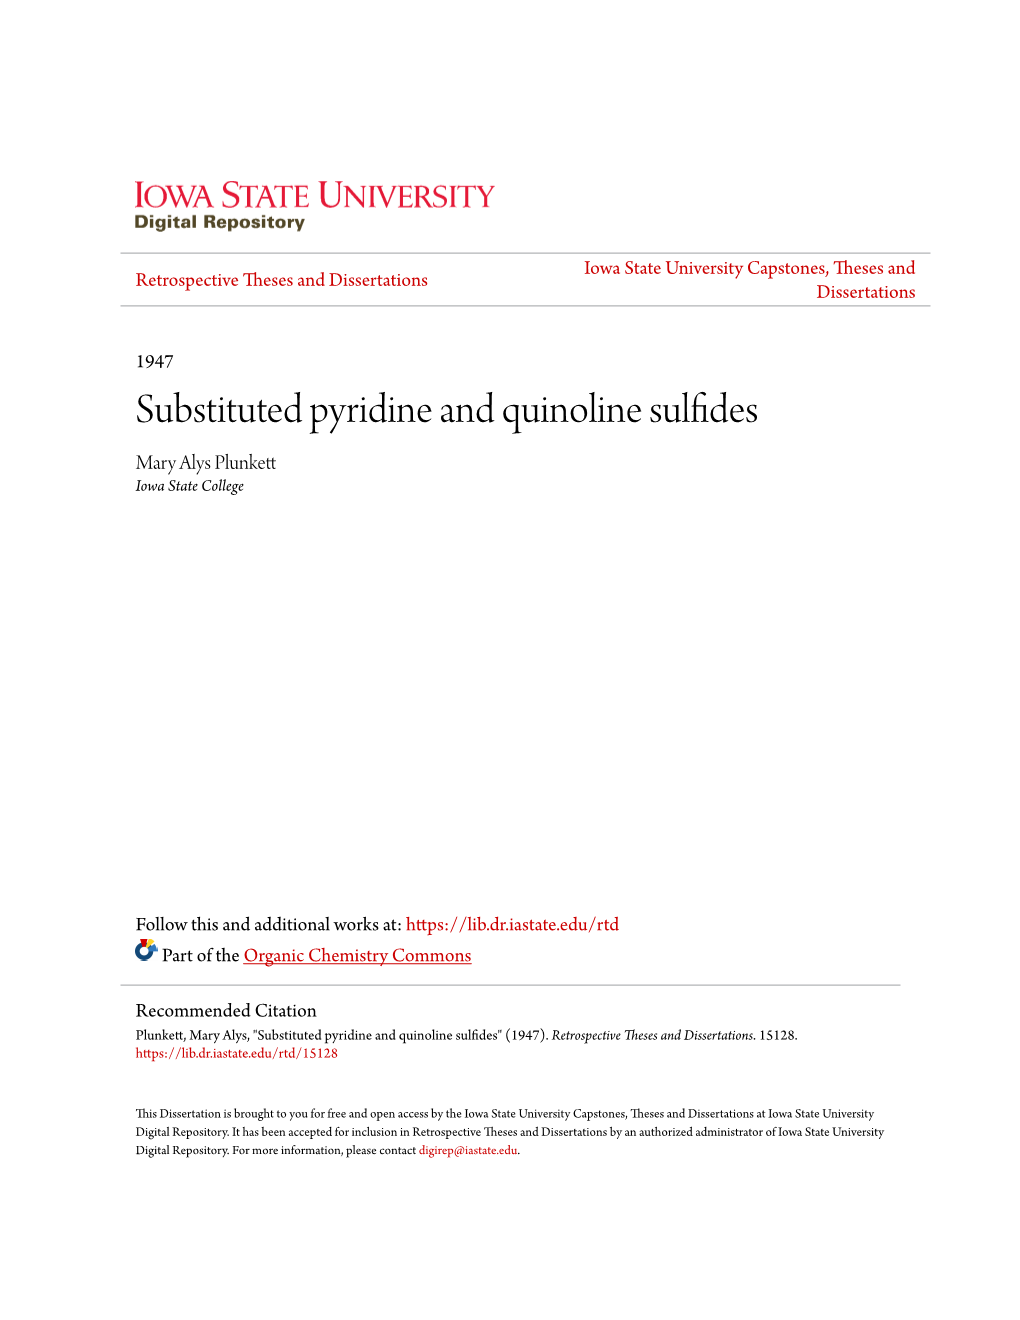 Substituted Pyridine and Quinoline Sulfides Mary Alys Plunkett Iowa State College